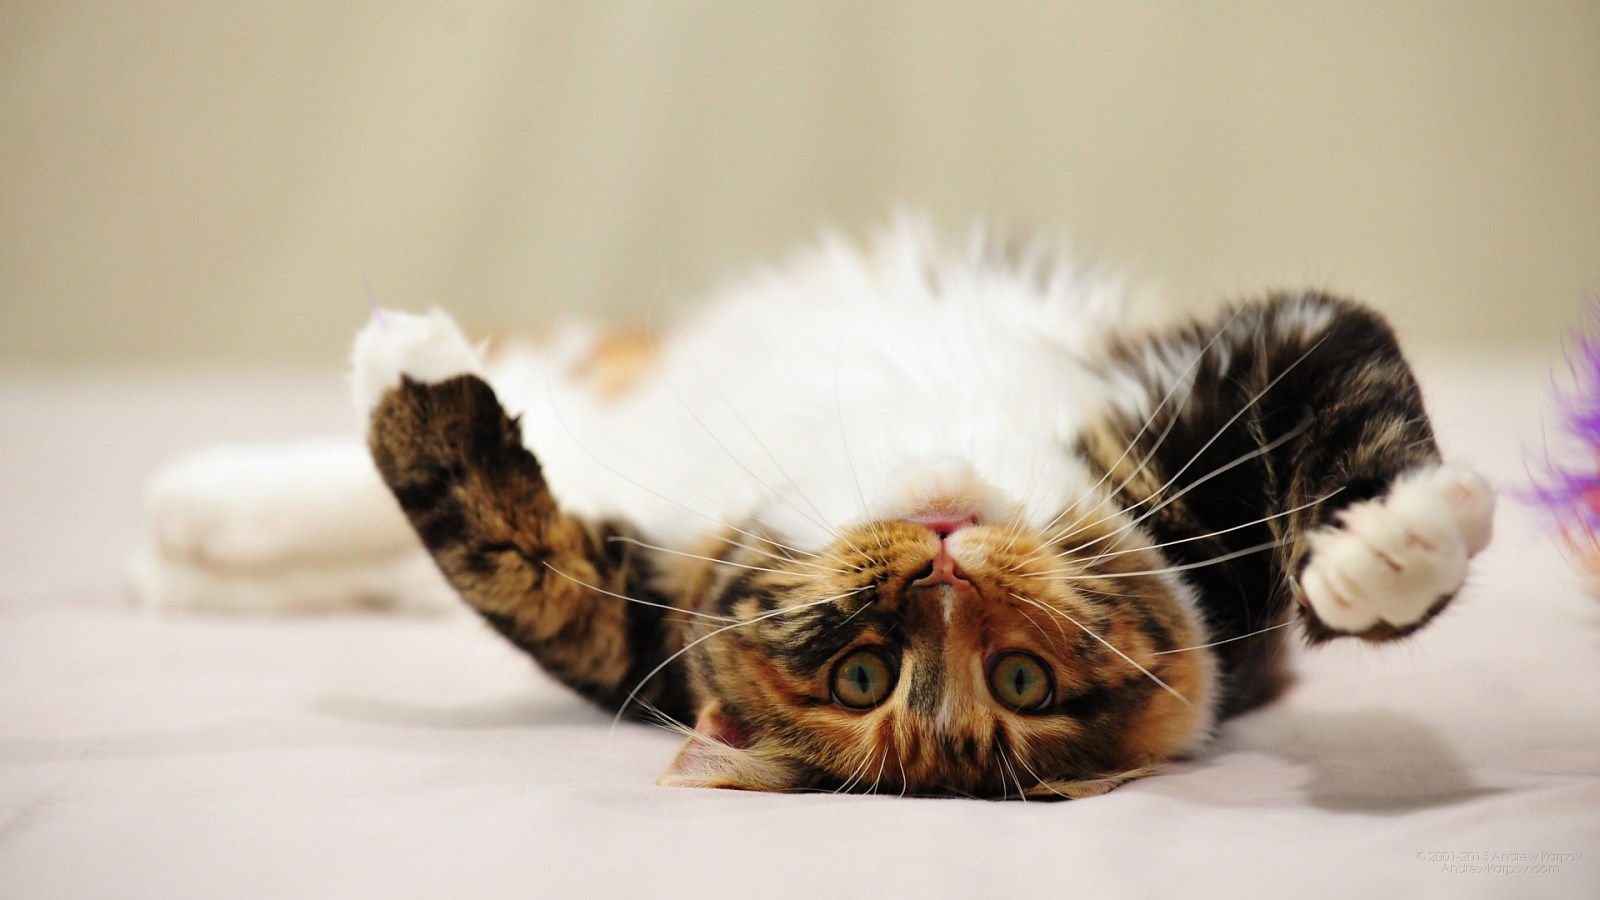 Pictures lolcat Funny Cat desktop wallpaper picture 1600 x